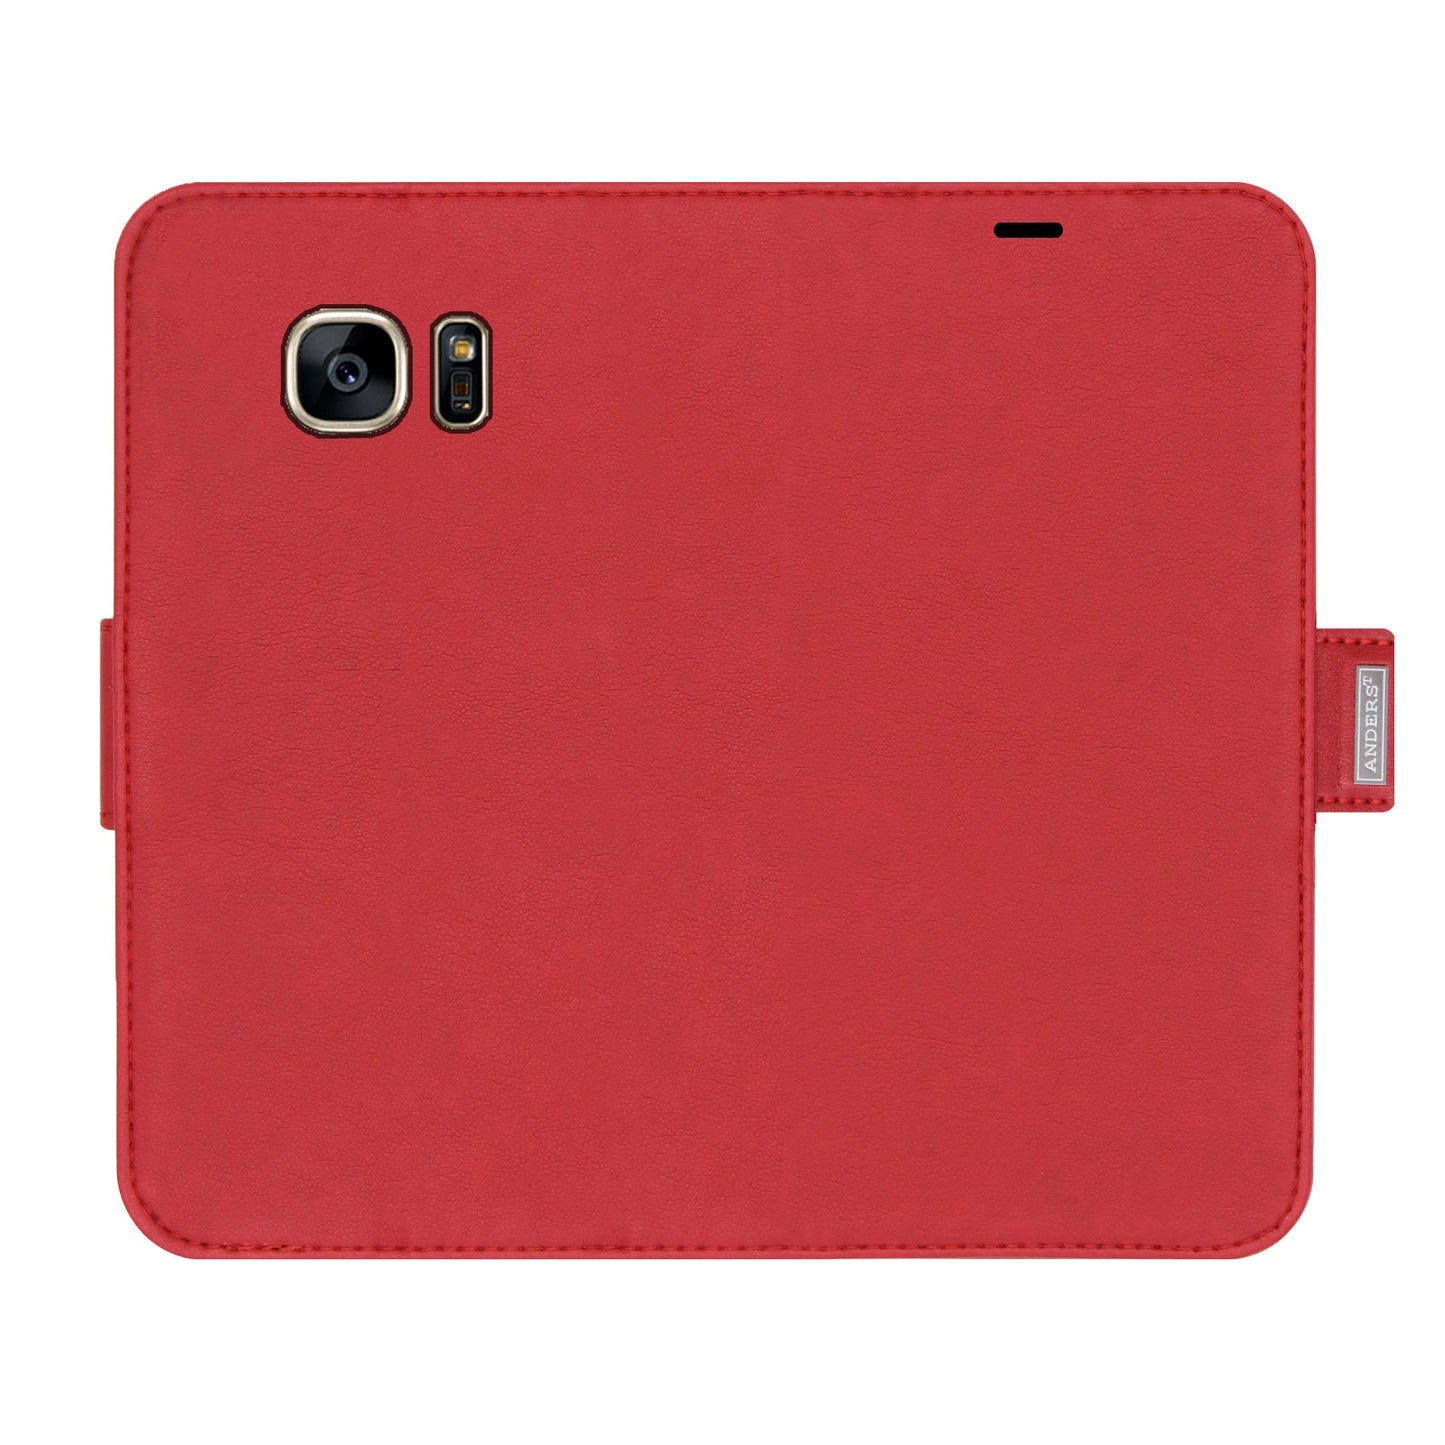 Coque Uni Rouge Victor pour Samsung Galaxy S7